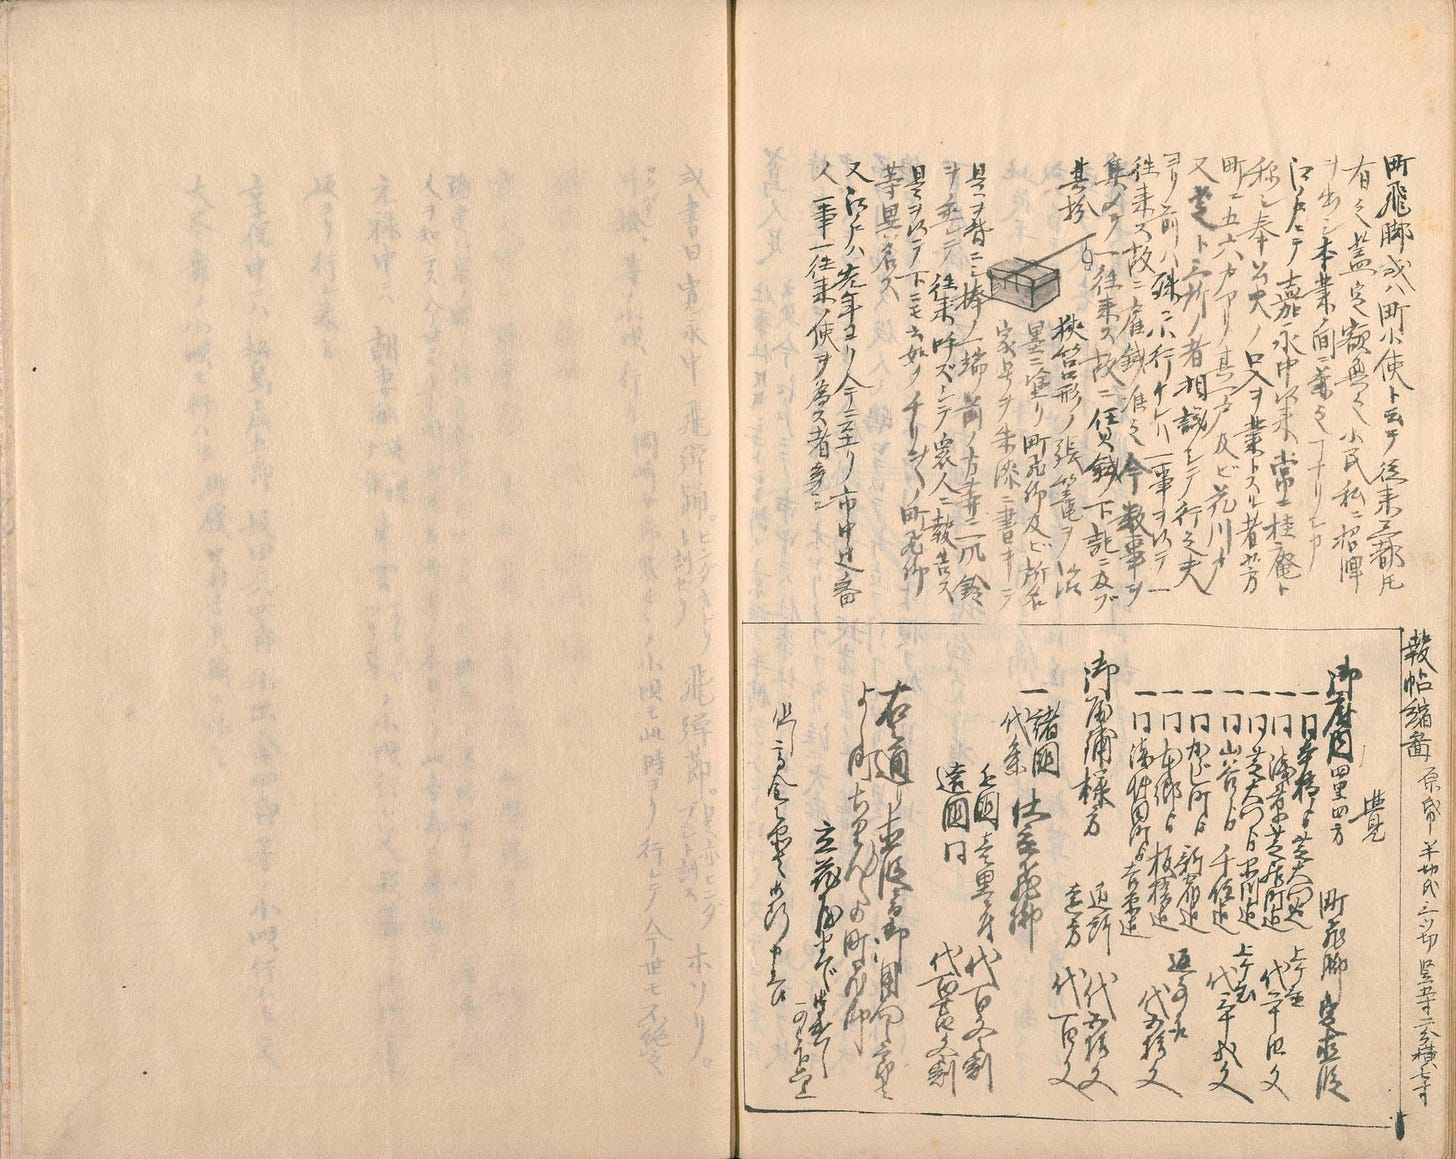 Description of Machi-bikyaku in Morisada Mankō